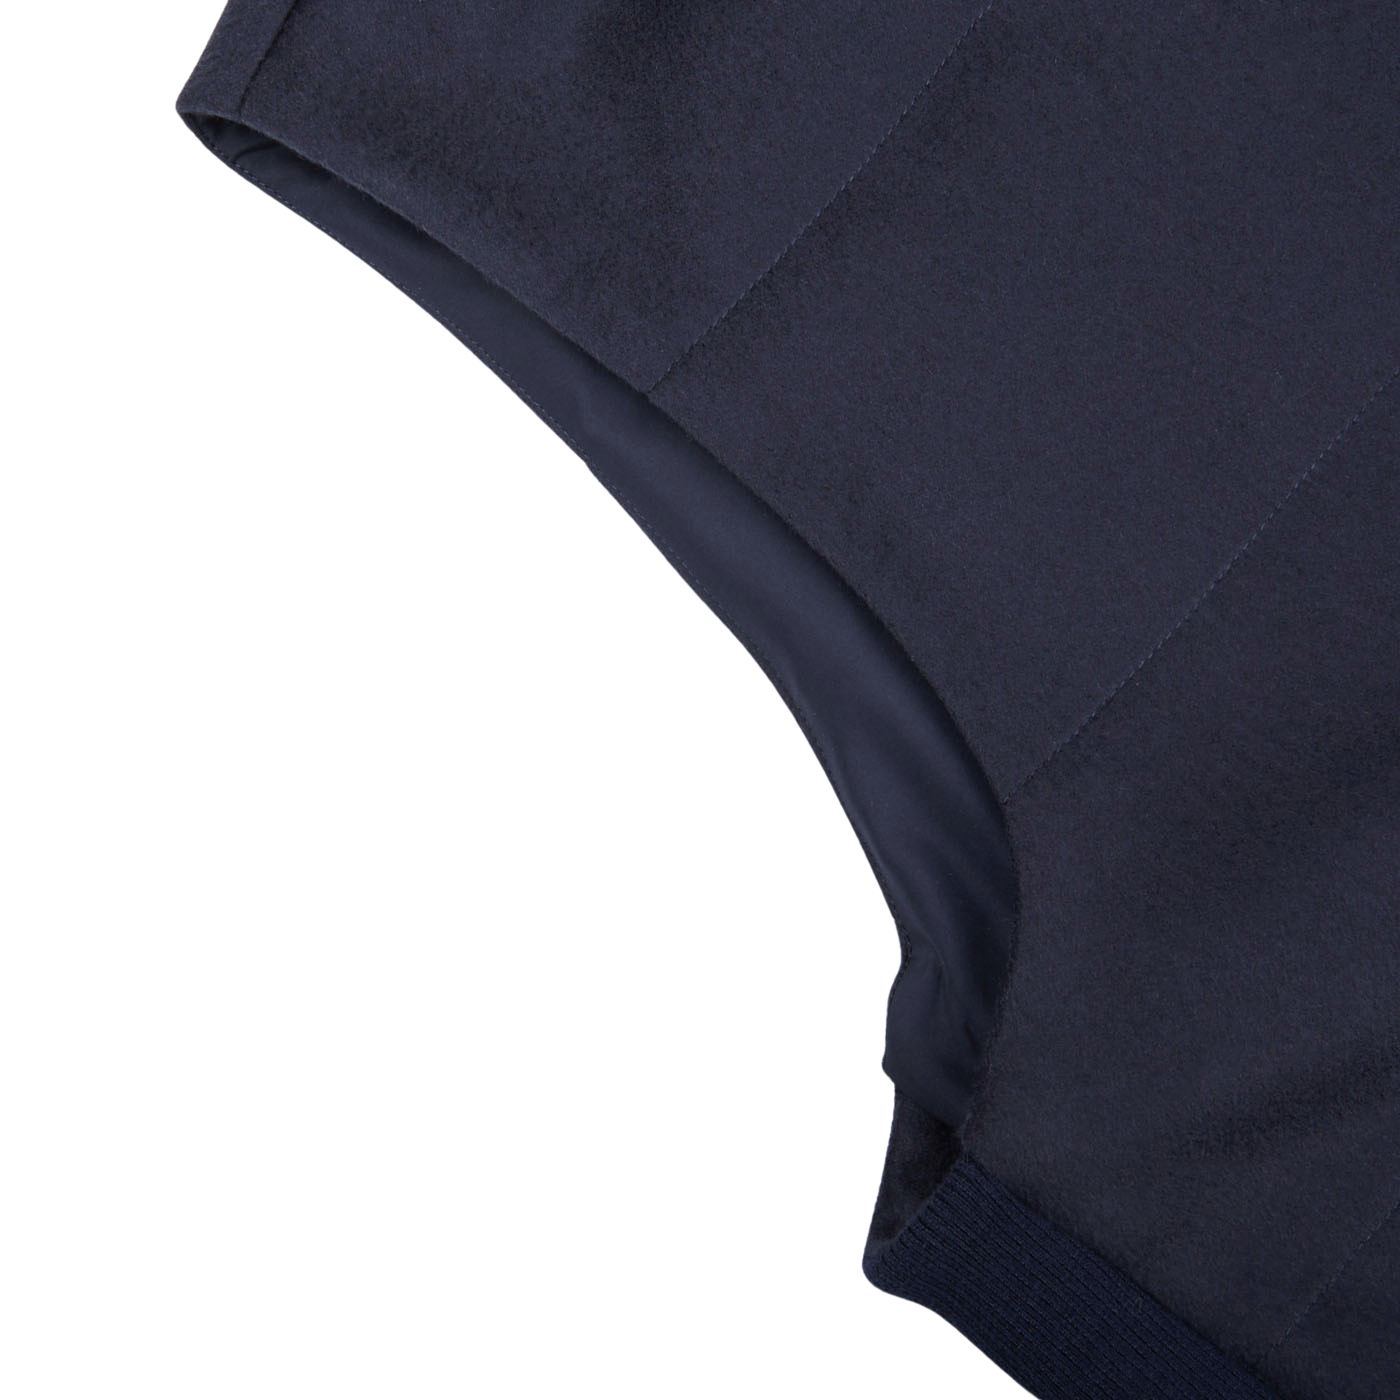 A close up of Maurizio Baldassari navy blue shorts on a white surface.